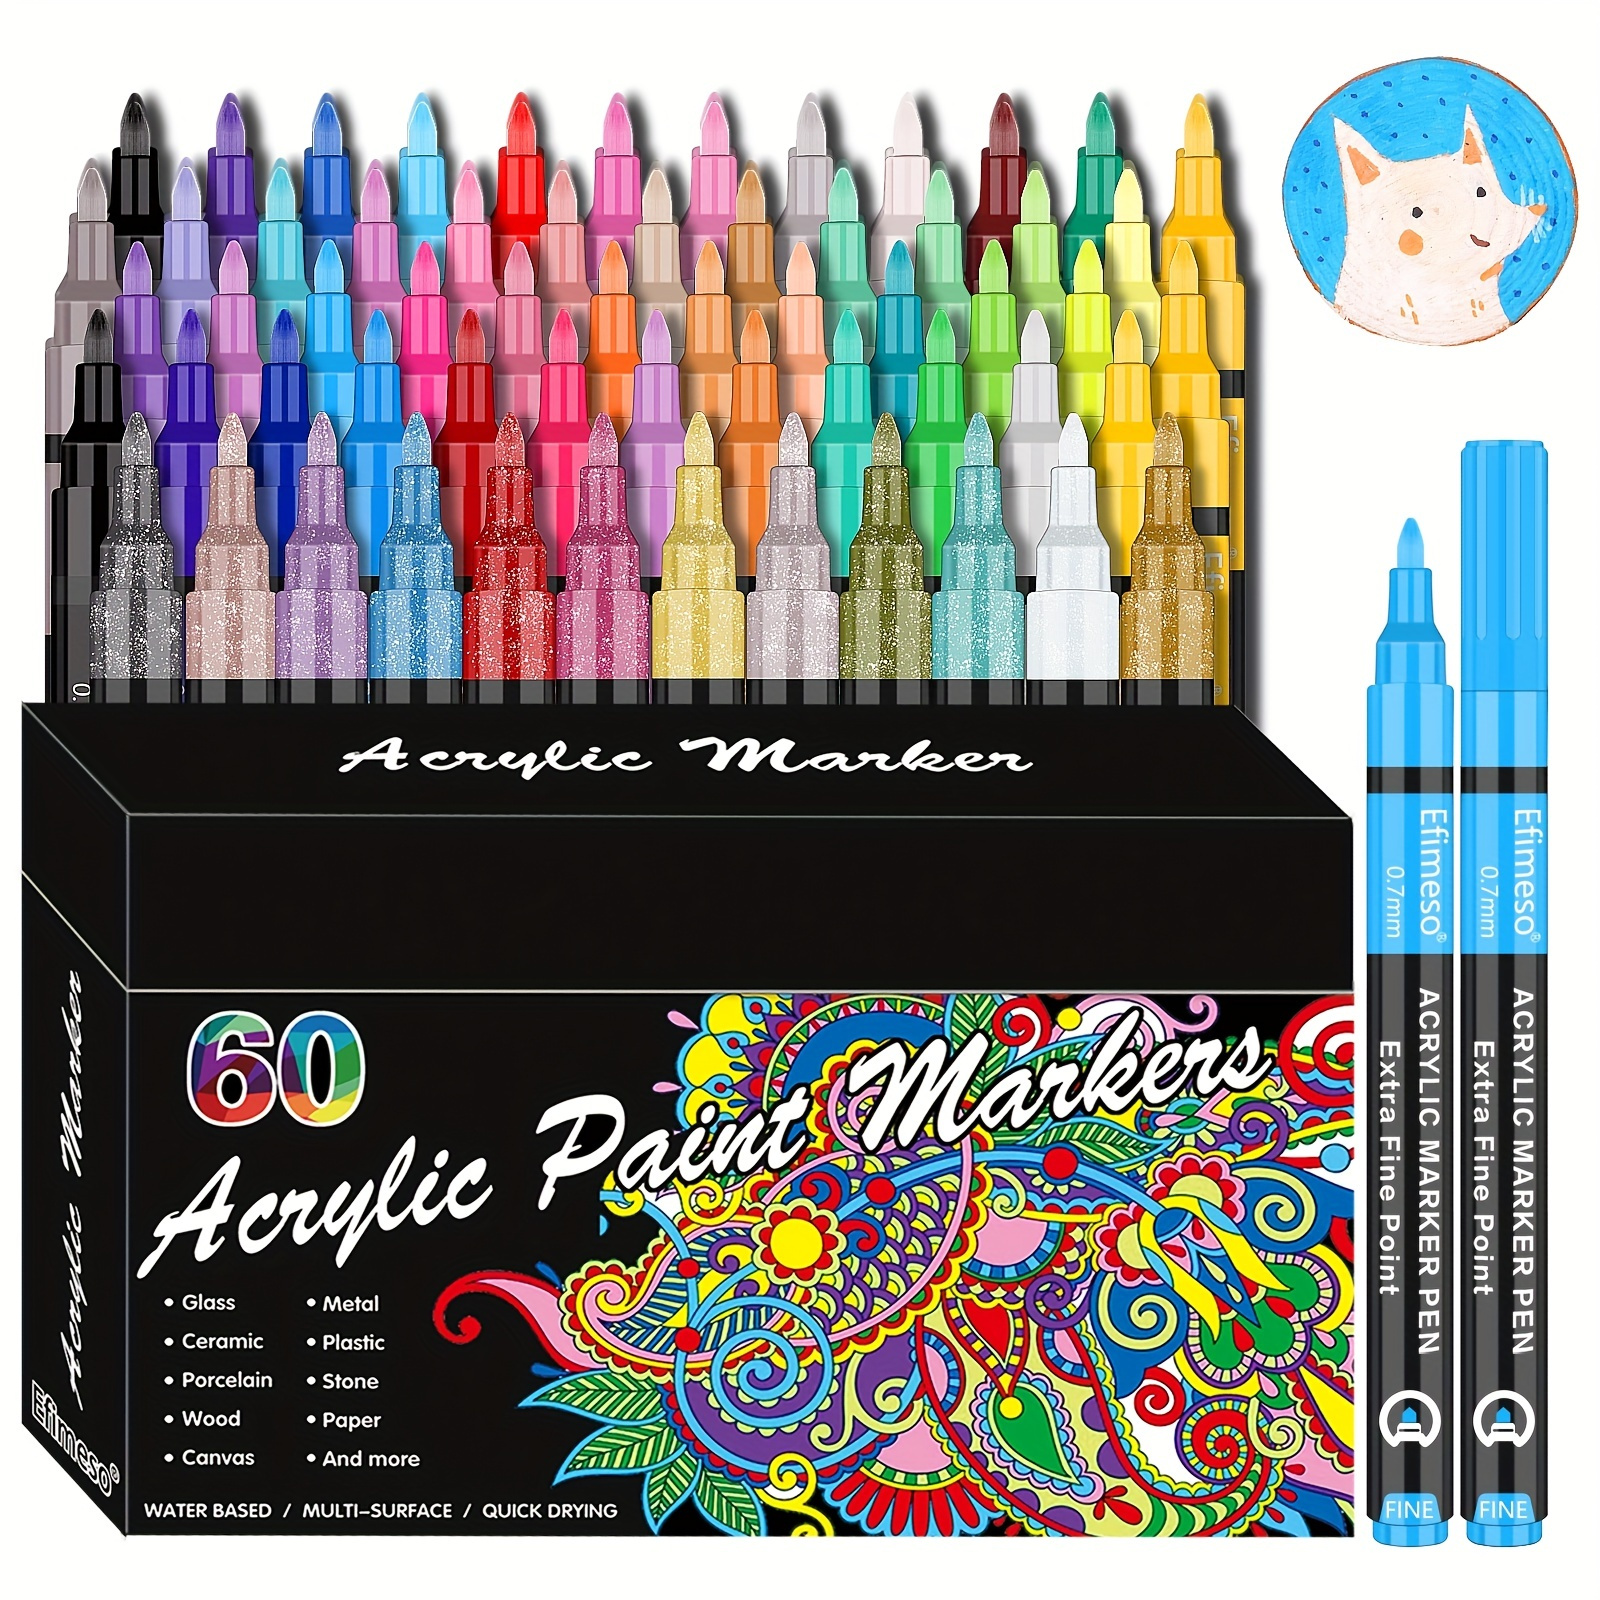 Betem 24 Colors Dual Tip Acrylic Paint Pens Markers, Premium Acrylic Paint Pens for Wood, Canvas, Stone, Rock Painting, Glass, Ceramic Surfaces, DIY